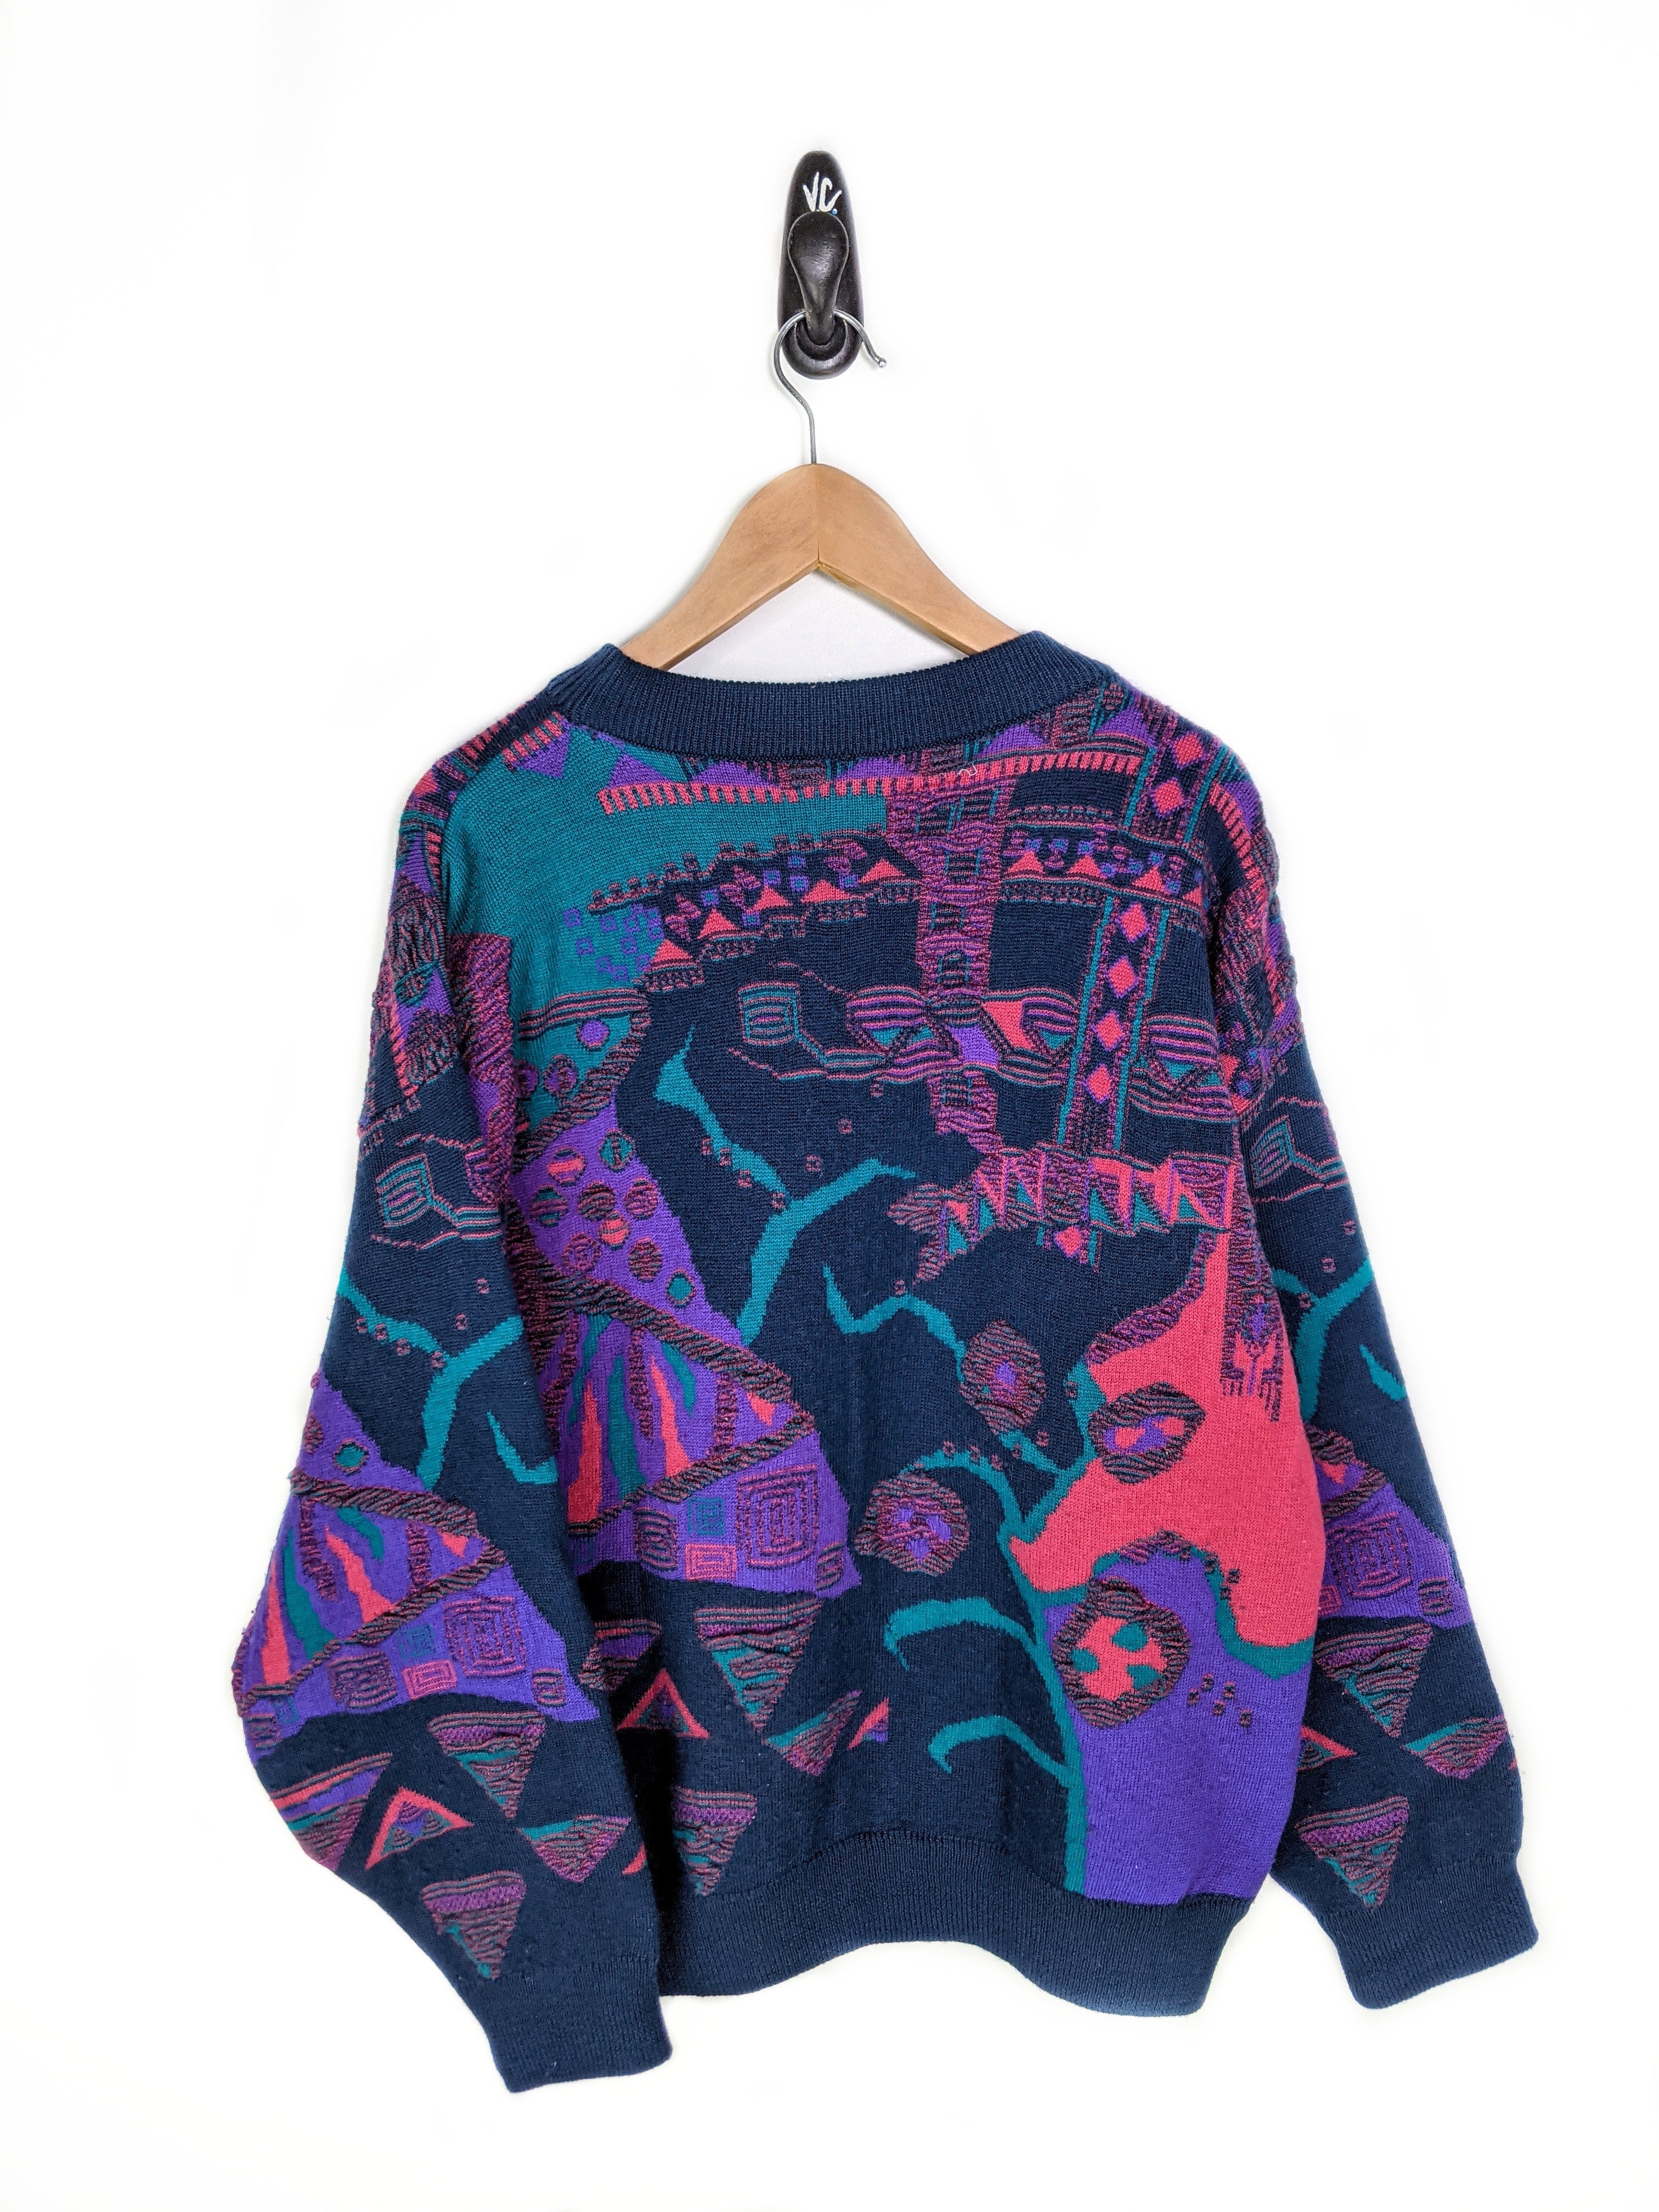 Coogi Style Sweater (L)